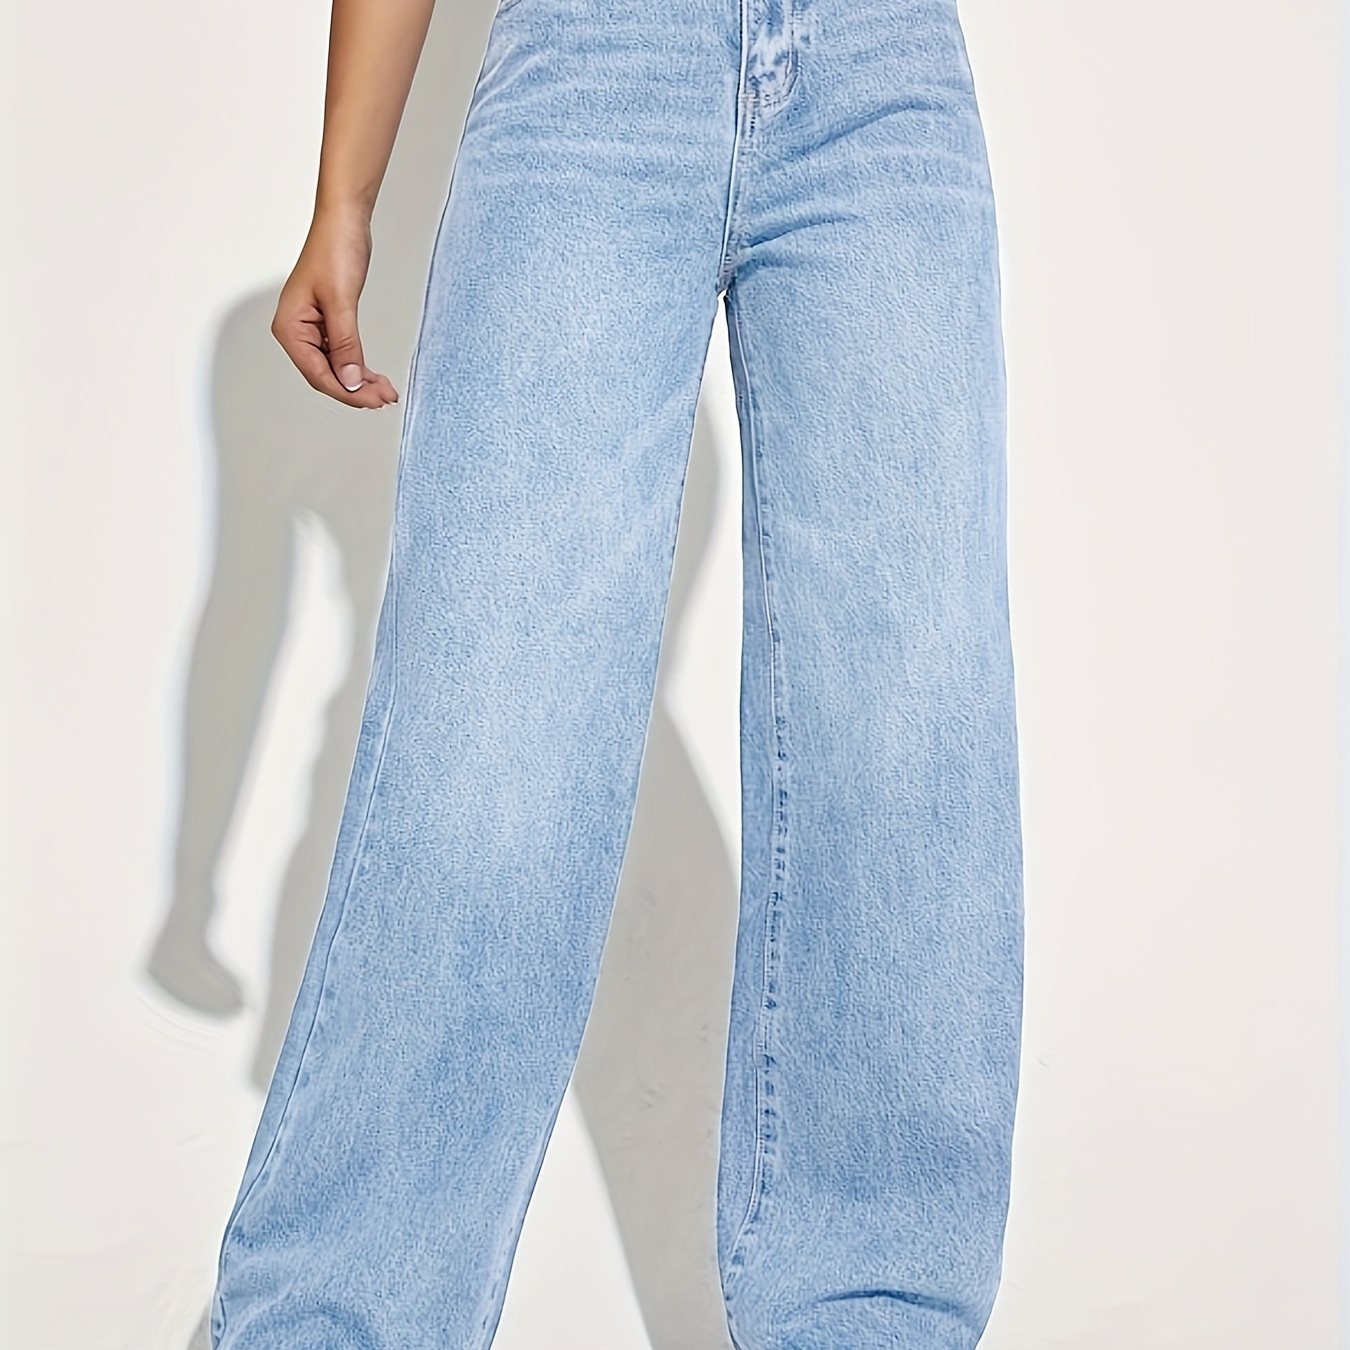 

Women's High-waisted Elegant Denim Jeans, Light Blue Straight-leg Casual Pants, Full-length Fashion Trousers For Everyday Wear For Fall